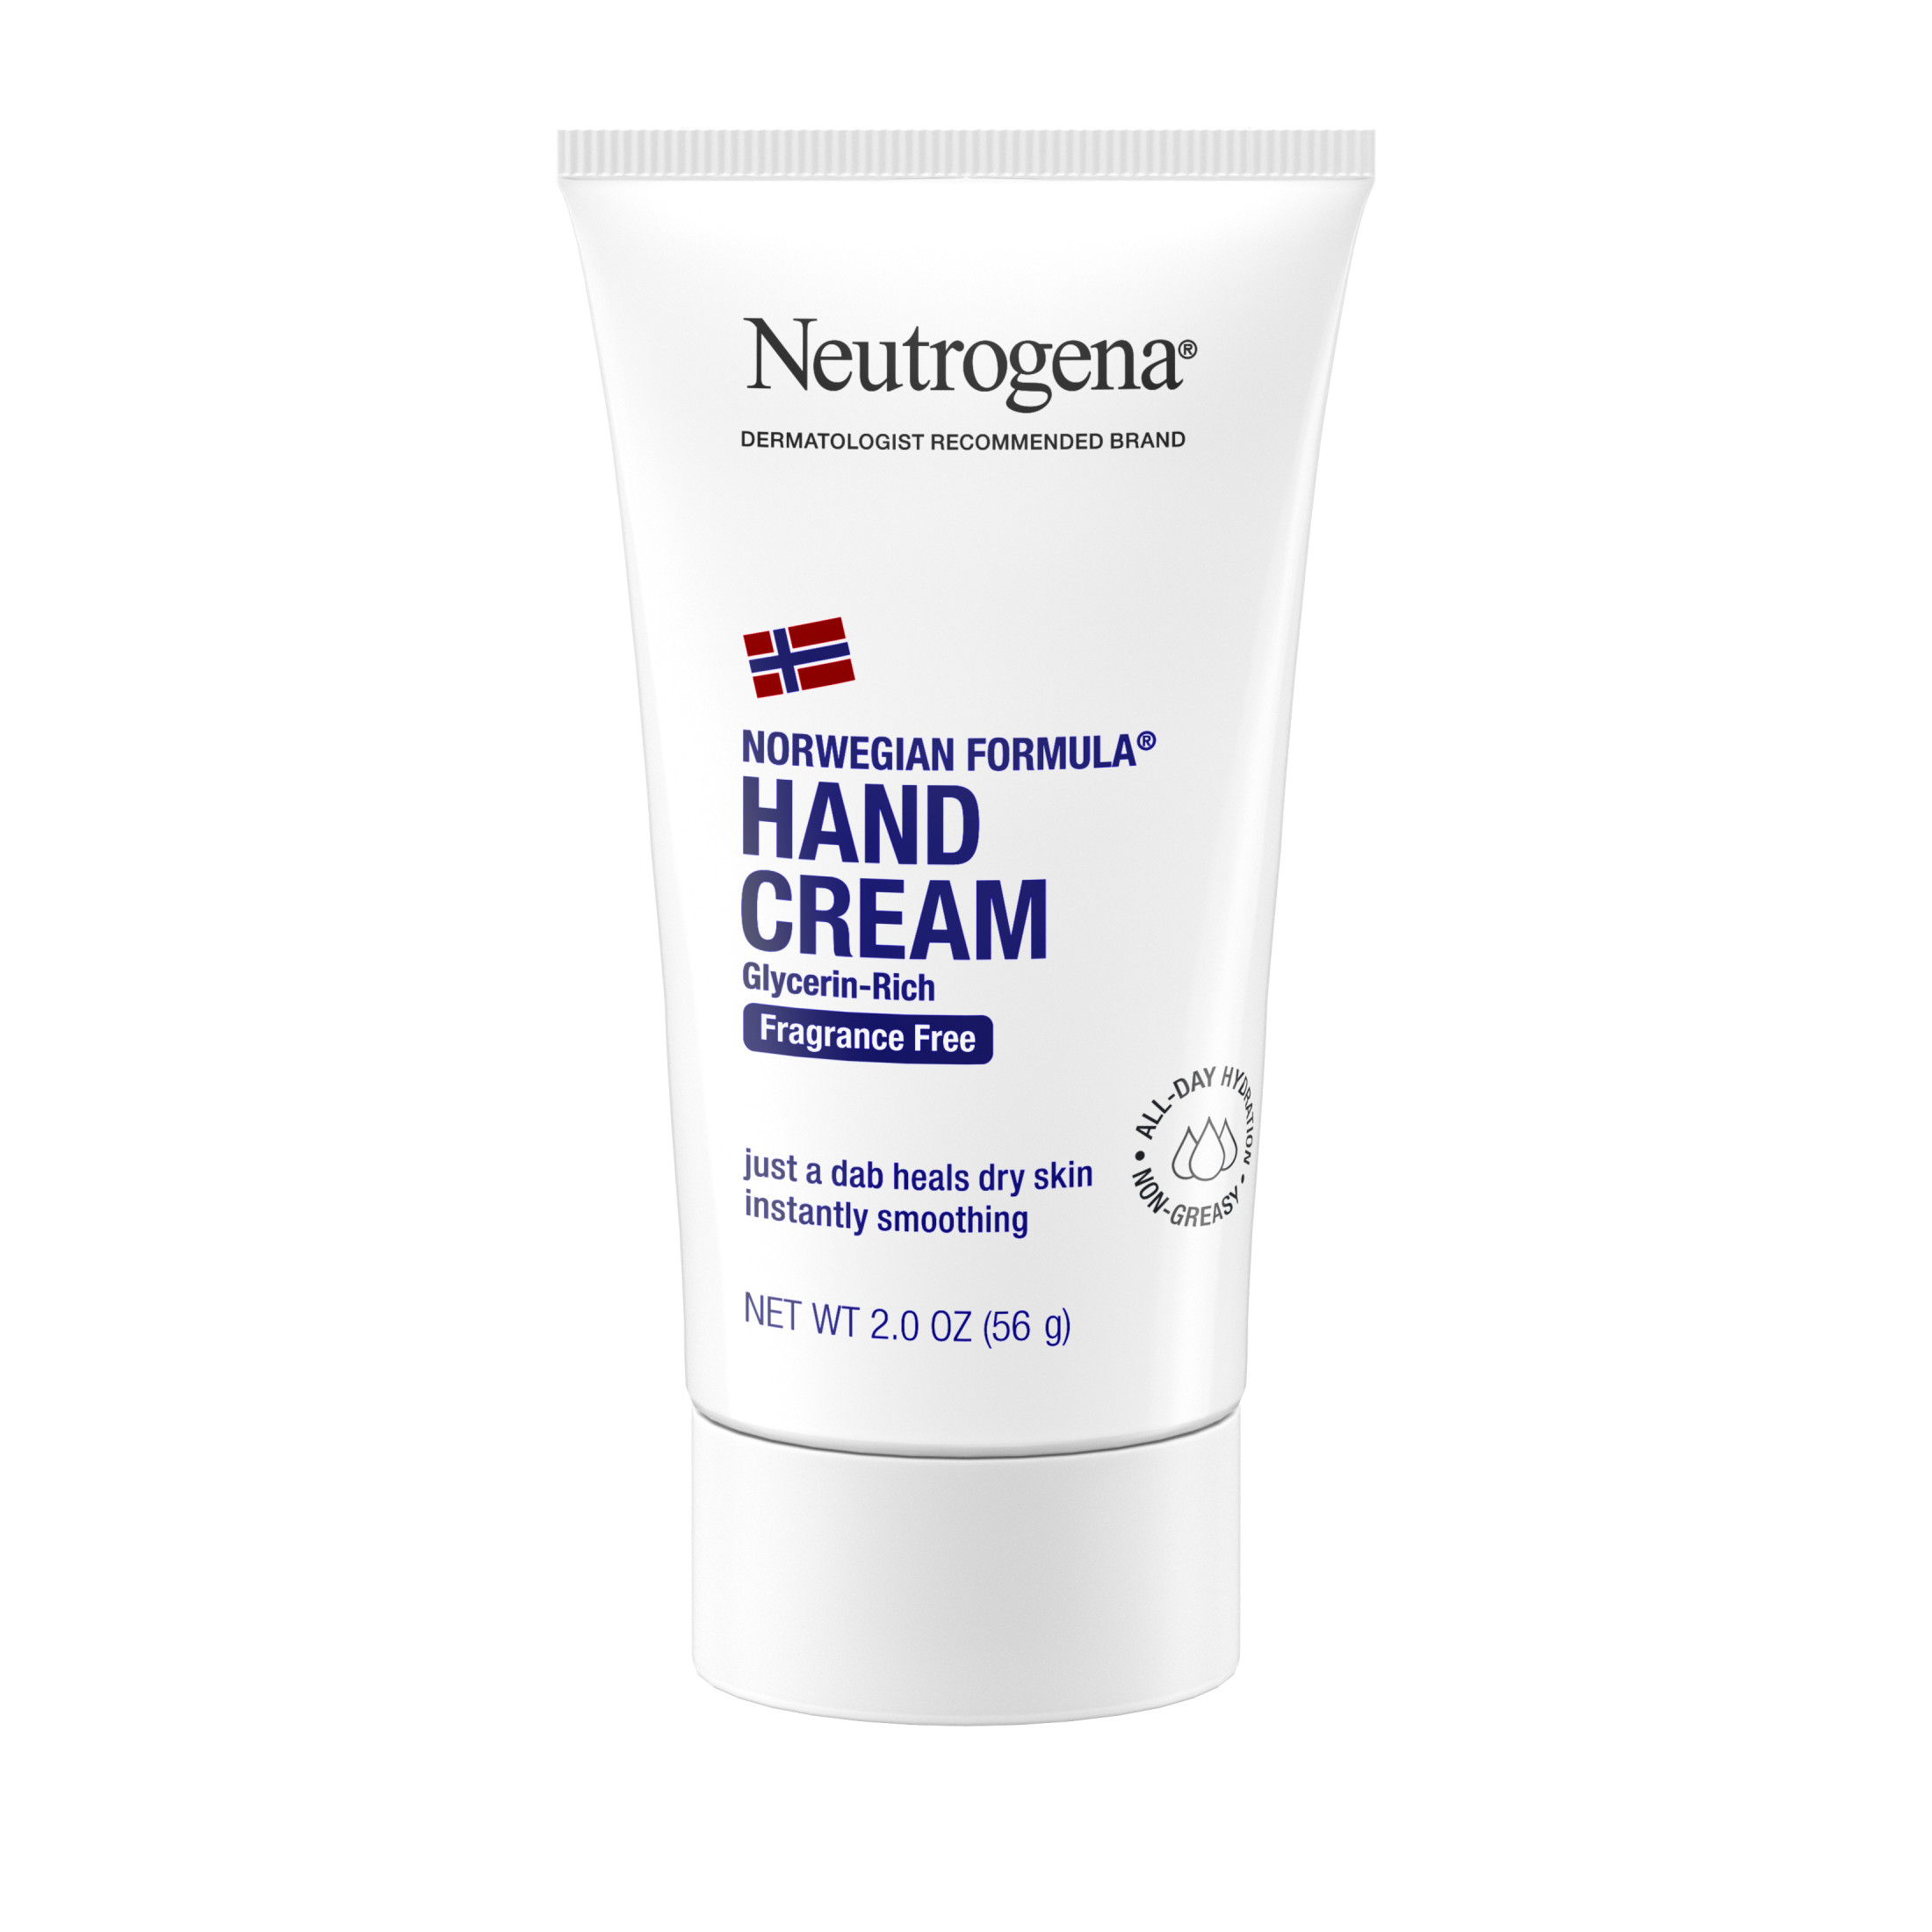 Neutrogena Norwegian Formula Dry Hand and Body Cream, Fragrance-Free Lotion, 2 oz - image 1 of 10